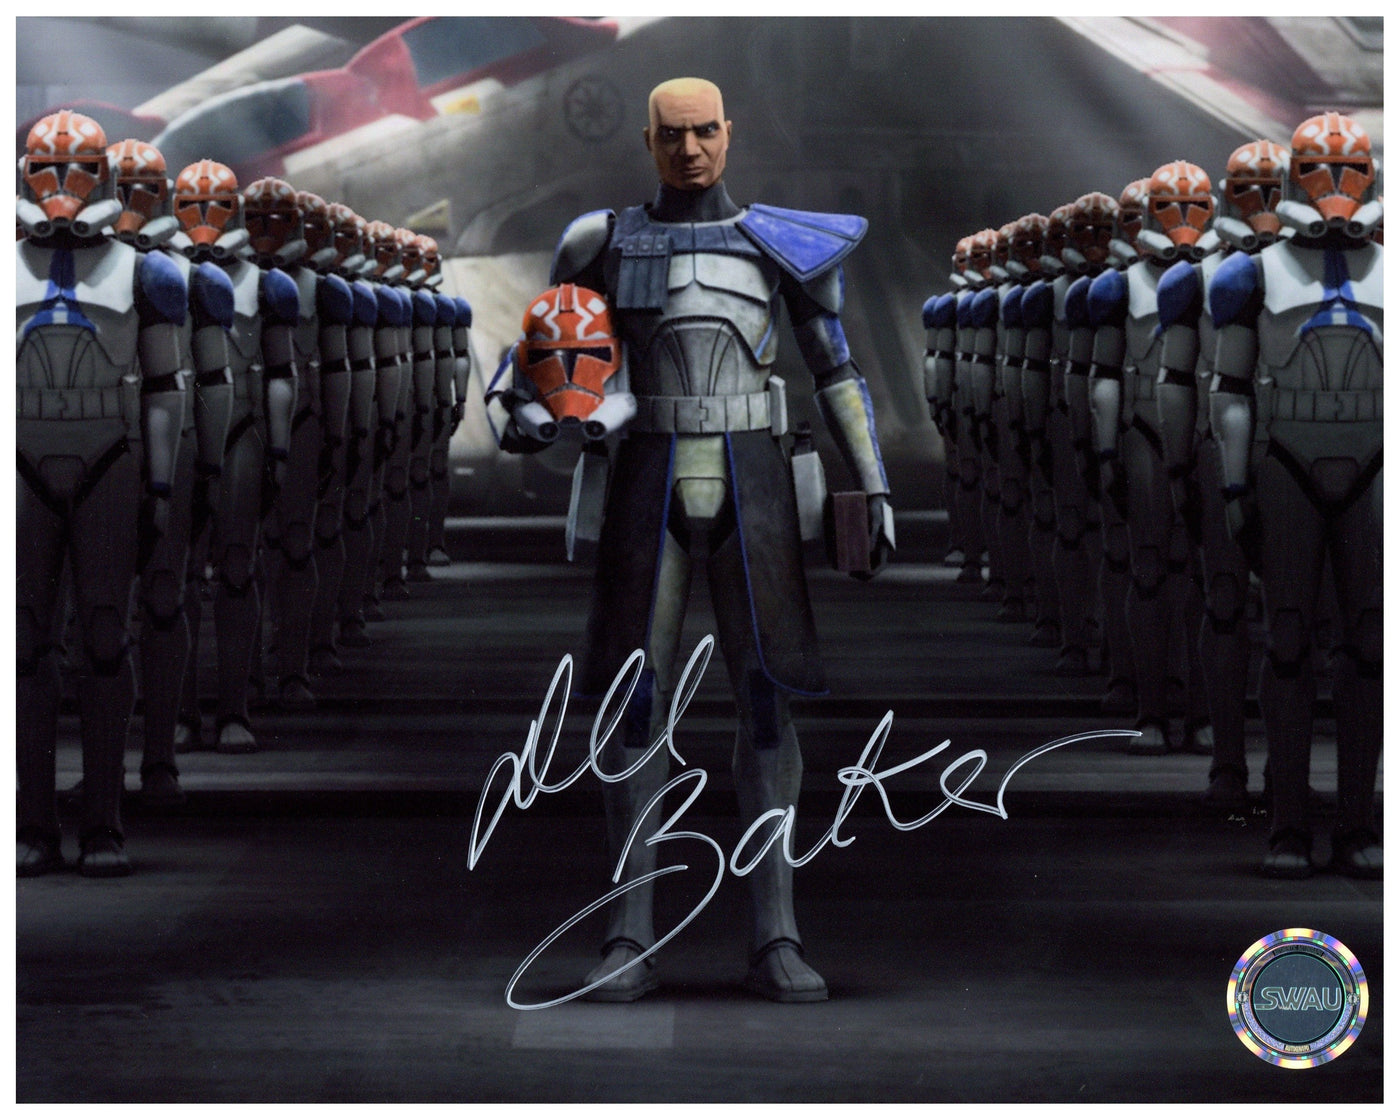 Dee Bradley Baker Signed 8x10 Photo Star Wars Bad Batch Autographed SWAU COA